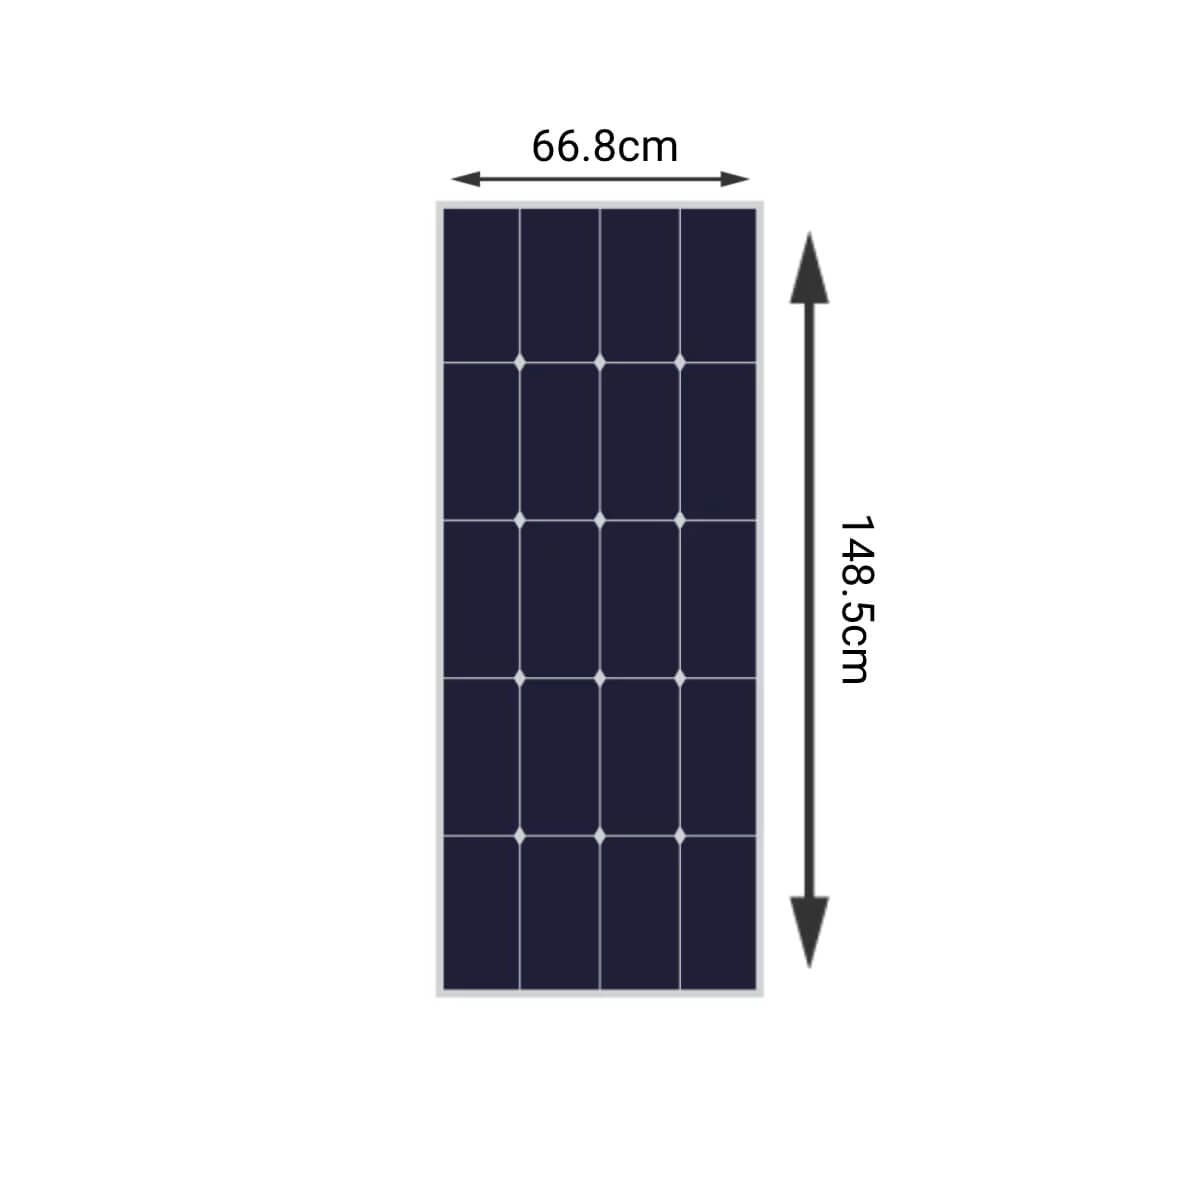 525W Solar Panel Kit - 3x 175W dimensions